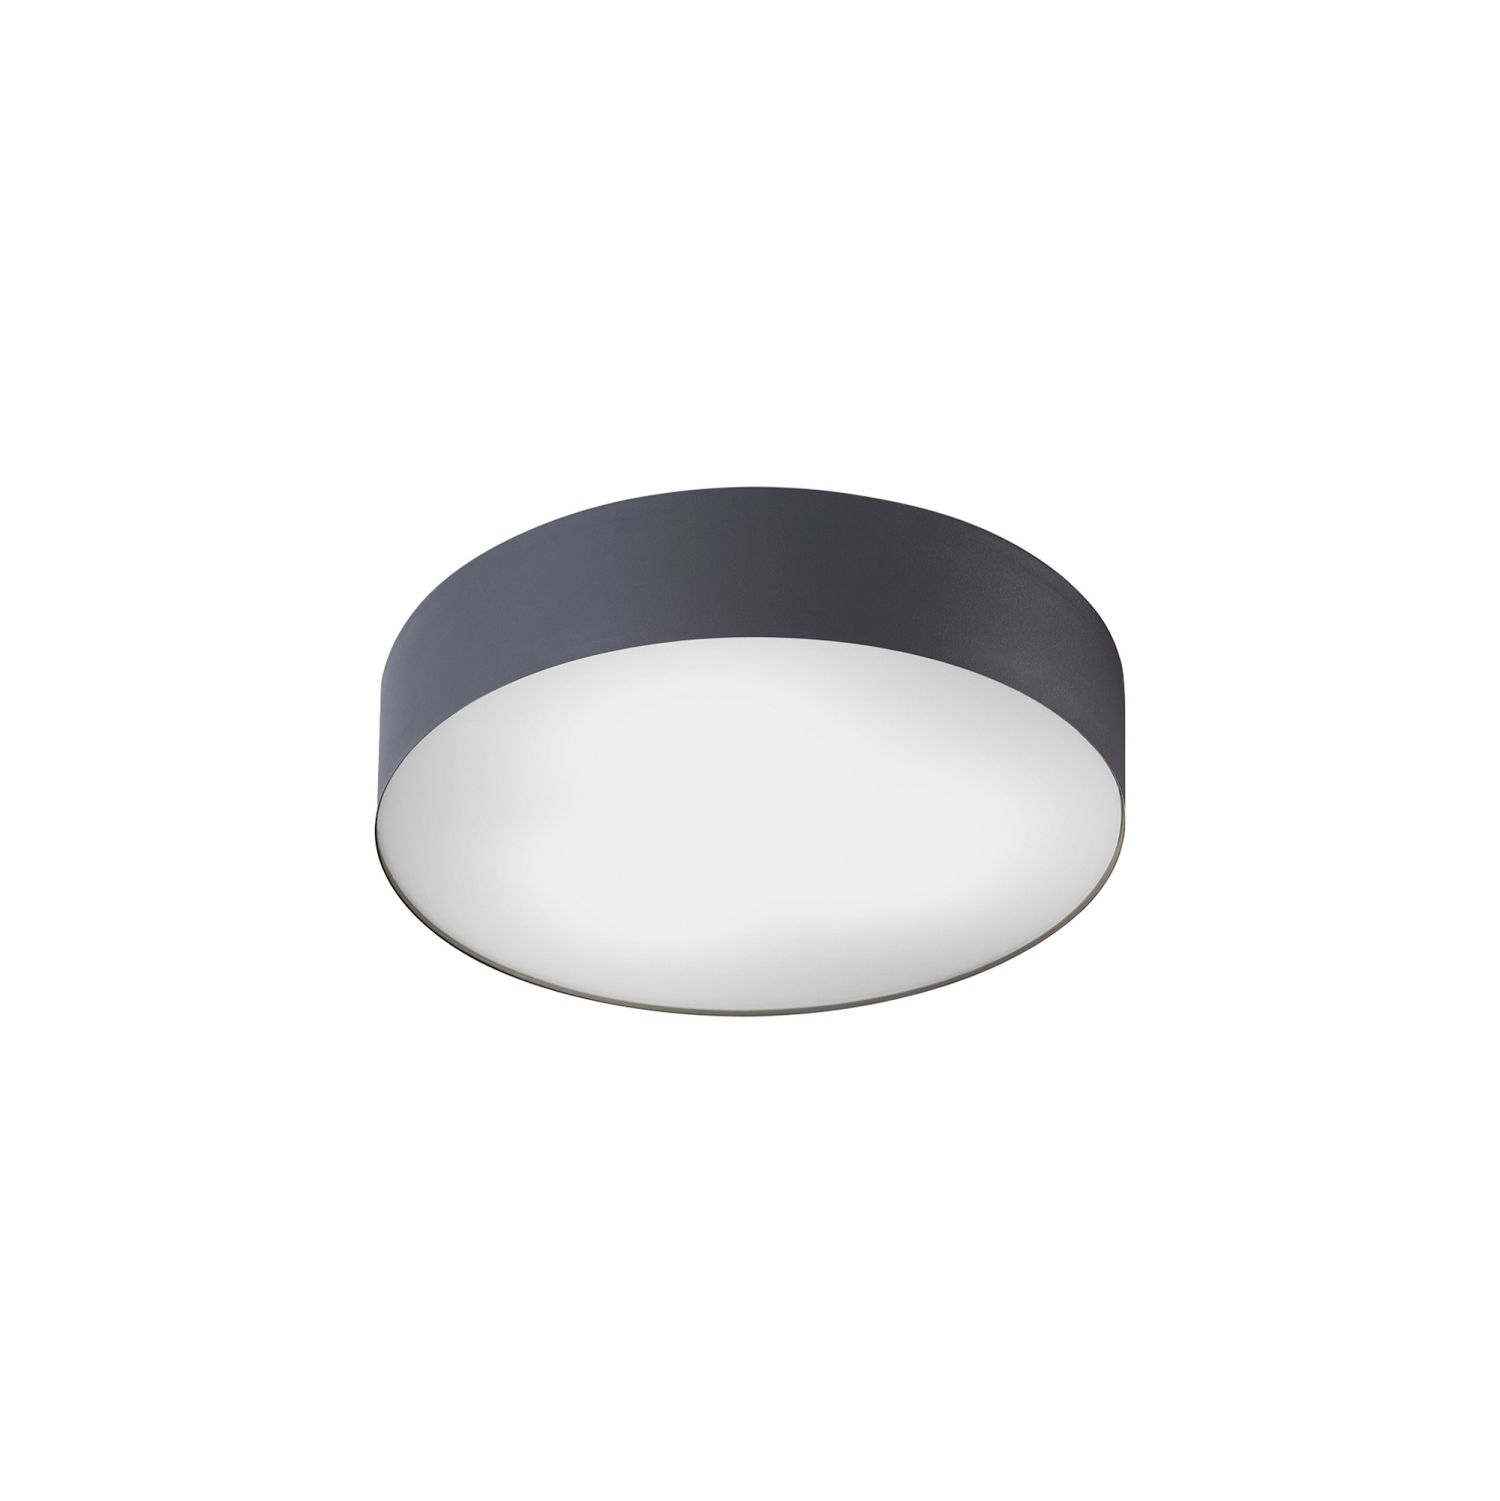 Deckenlampe Grau 3x E14 Ø 40,5 cm rund blendarm